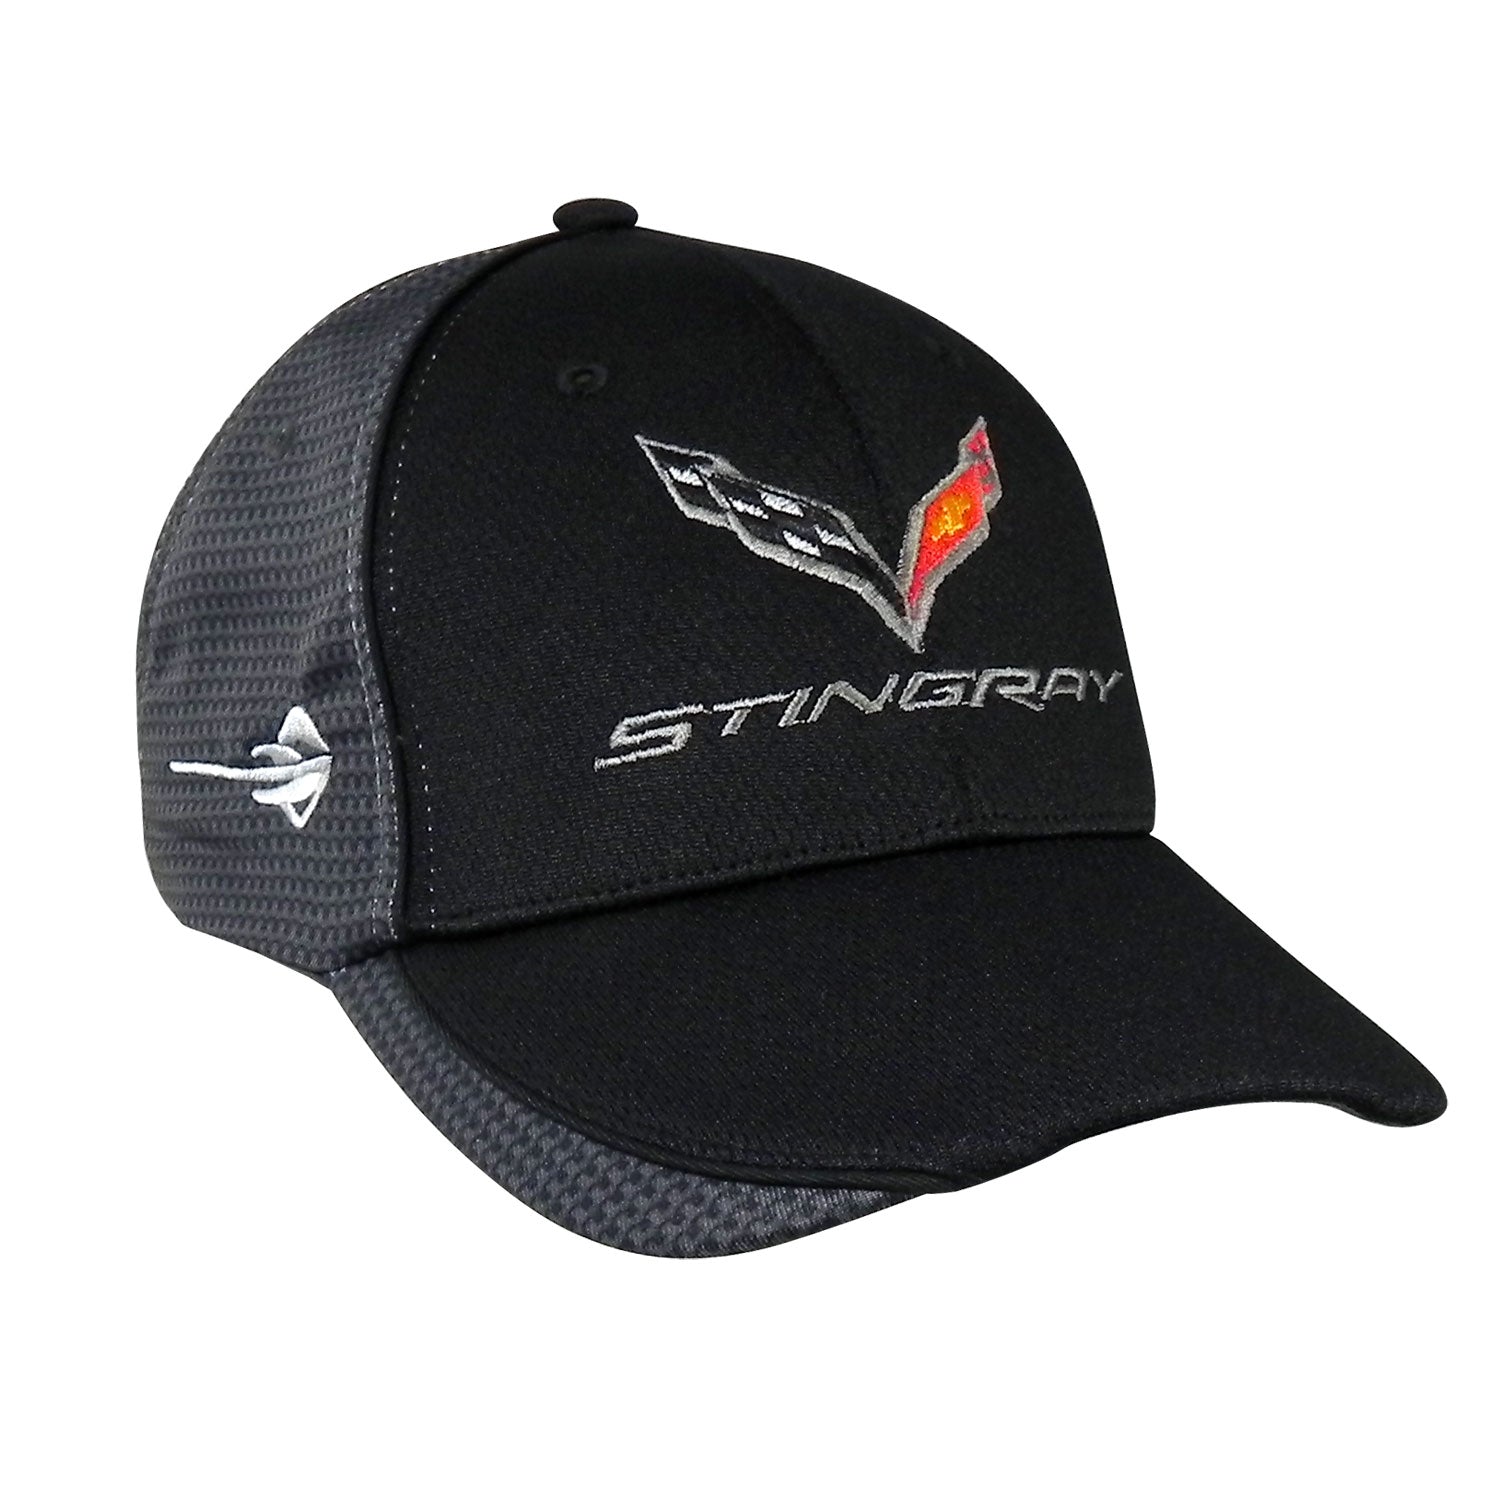 Corvette Hat/Cap - Embroidered - Carbon Fiber Pattern - Black : C7 Stingray, Z51